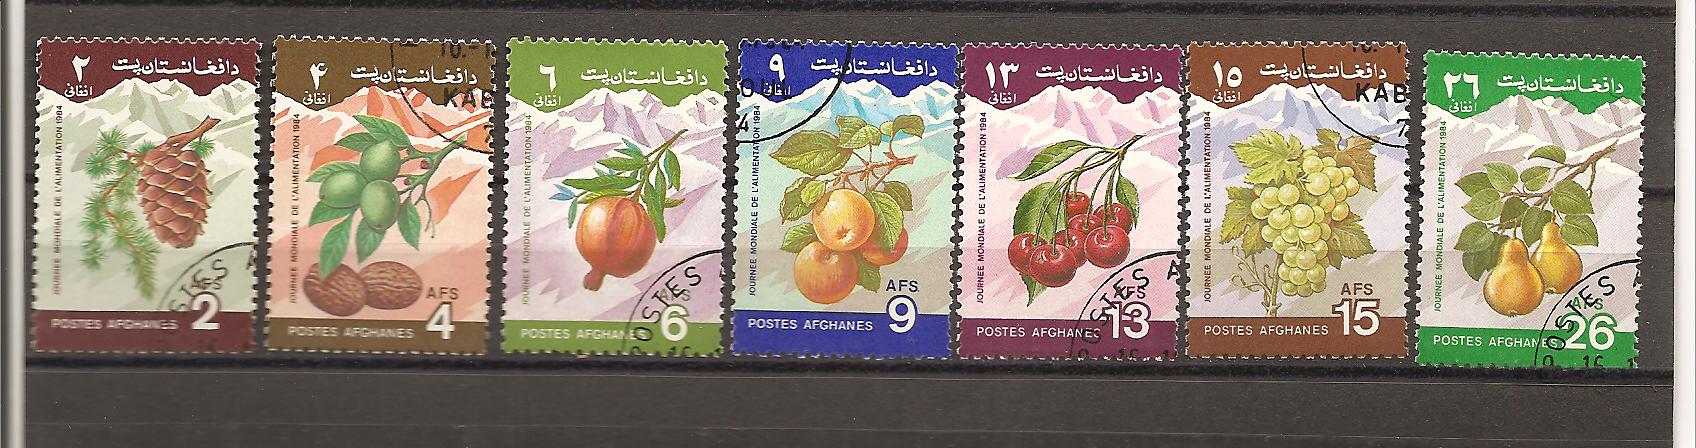 23709 - Afghanistan - serie completa usata: Frutta